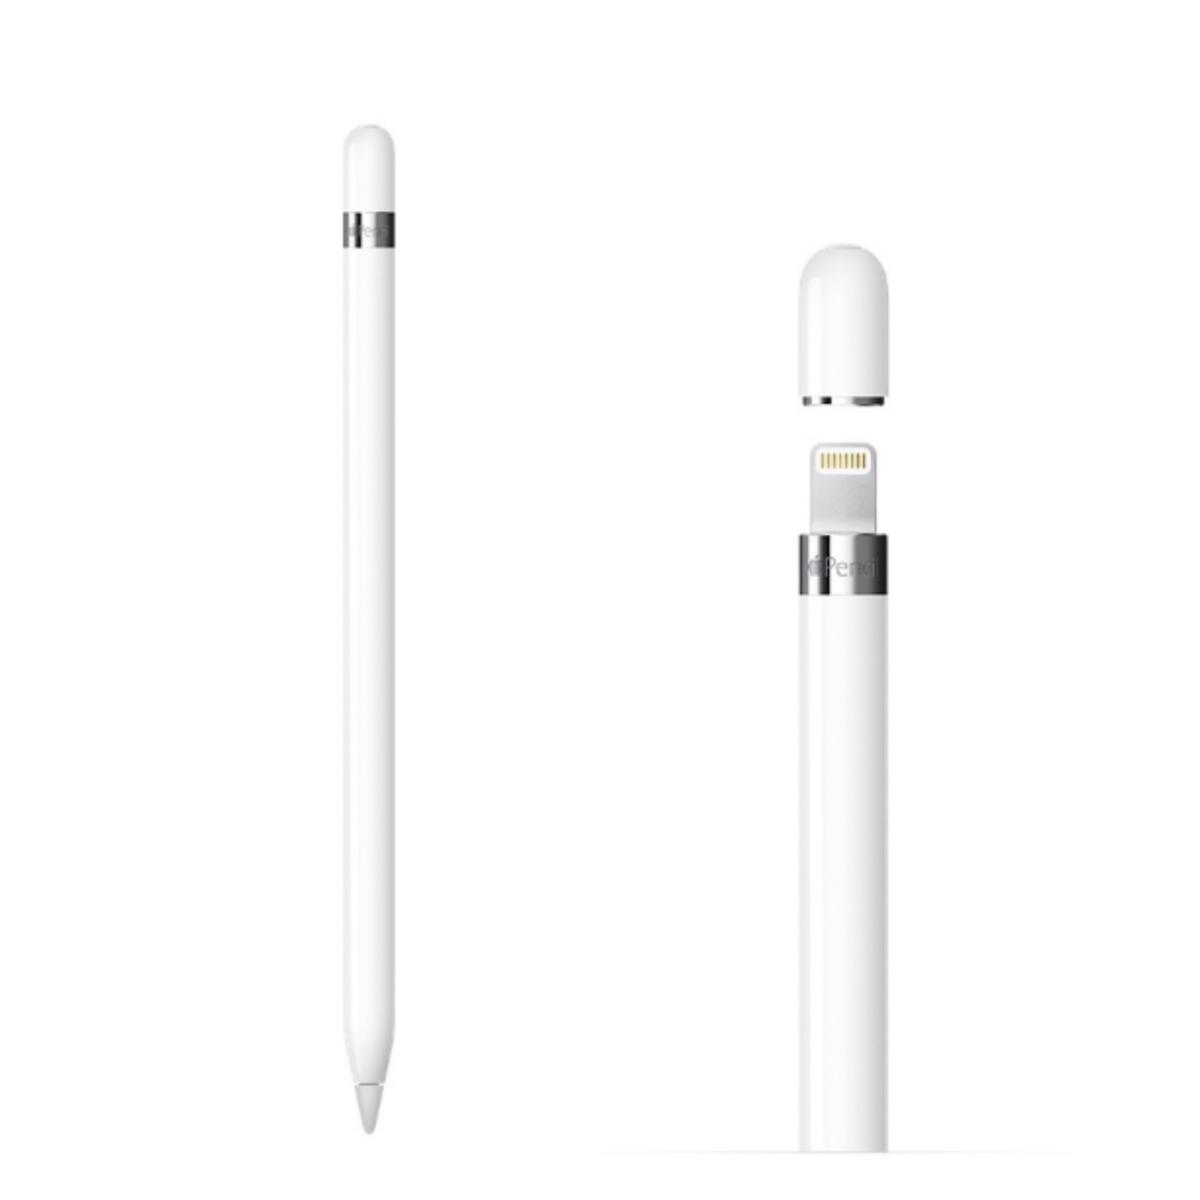 Best Apple Pencil Alternative Wikilove